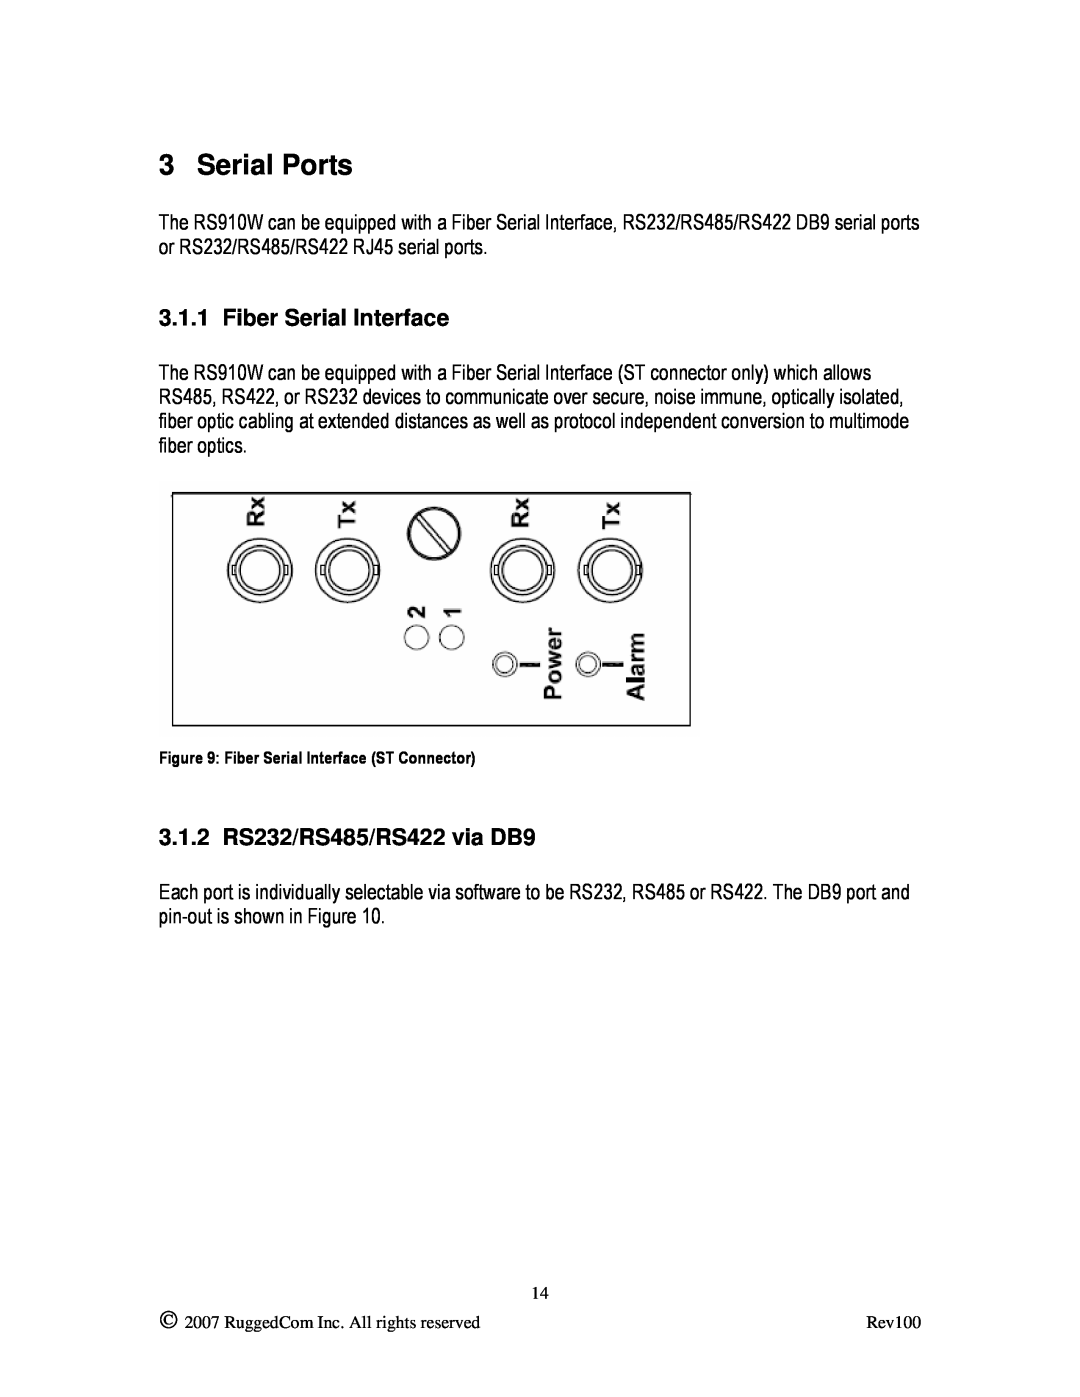 RuggedCom RS910W manual Serial Ports, Fiber Serial Interface, 3.1.2 RS232/RS485/RS422 via DB9 